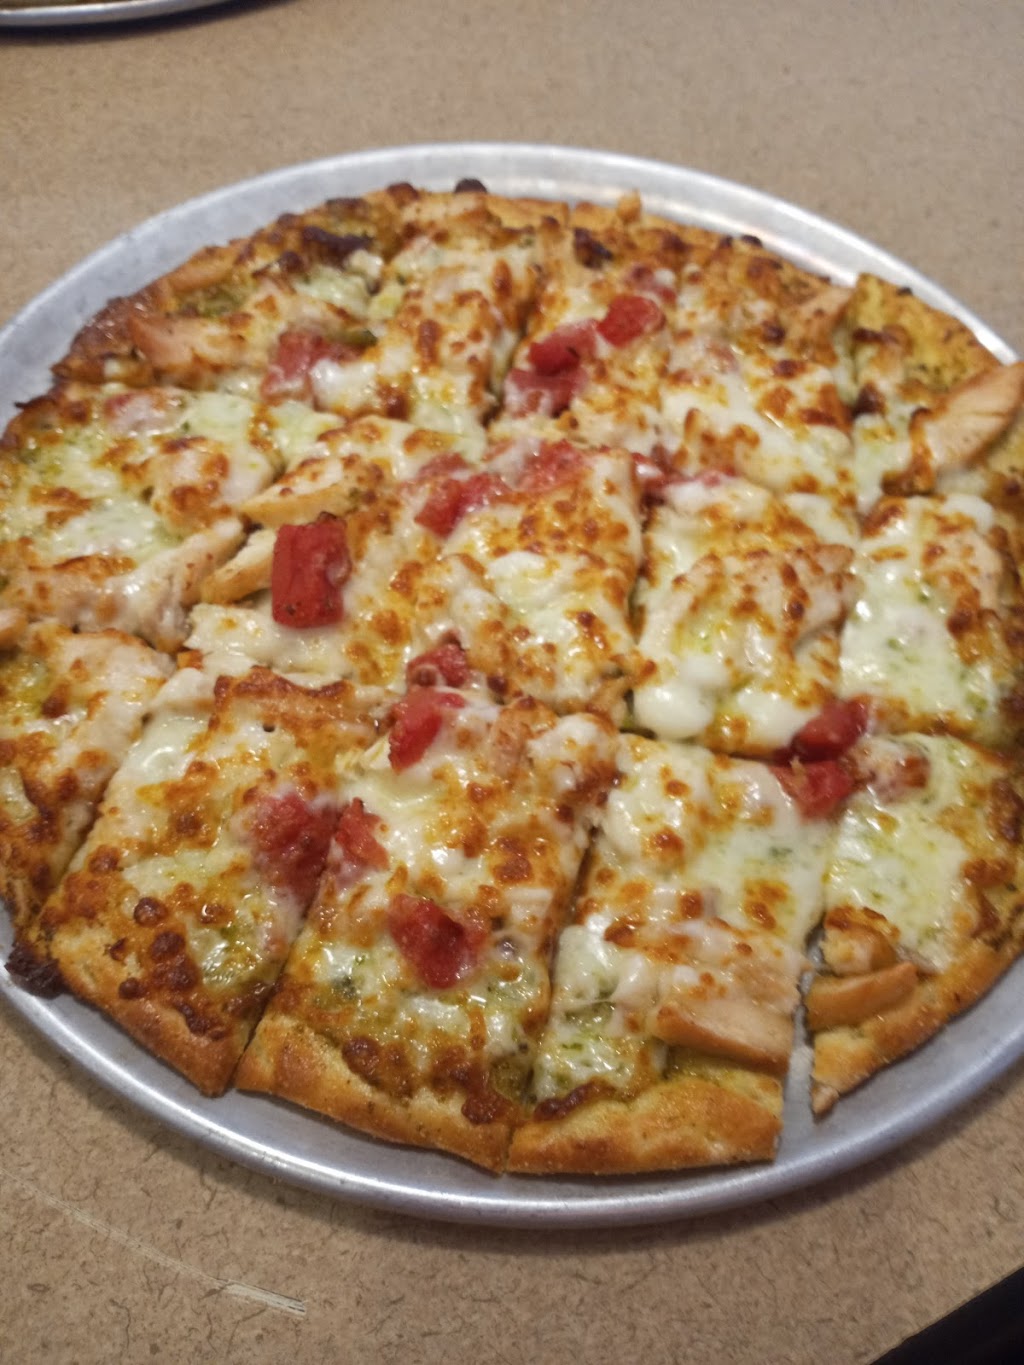 Stevi Bs Pizza Buffet | 7003 Concourse Pkwy, Douglasville, GA 30134 | Phone: (678) 229-5400